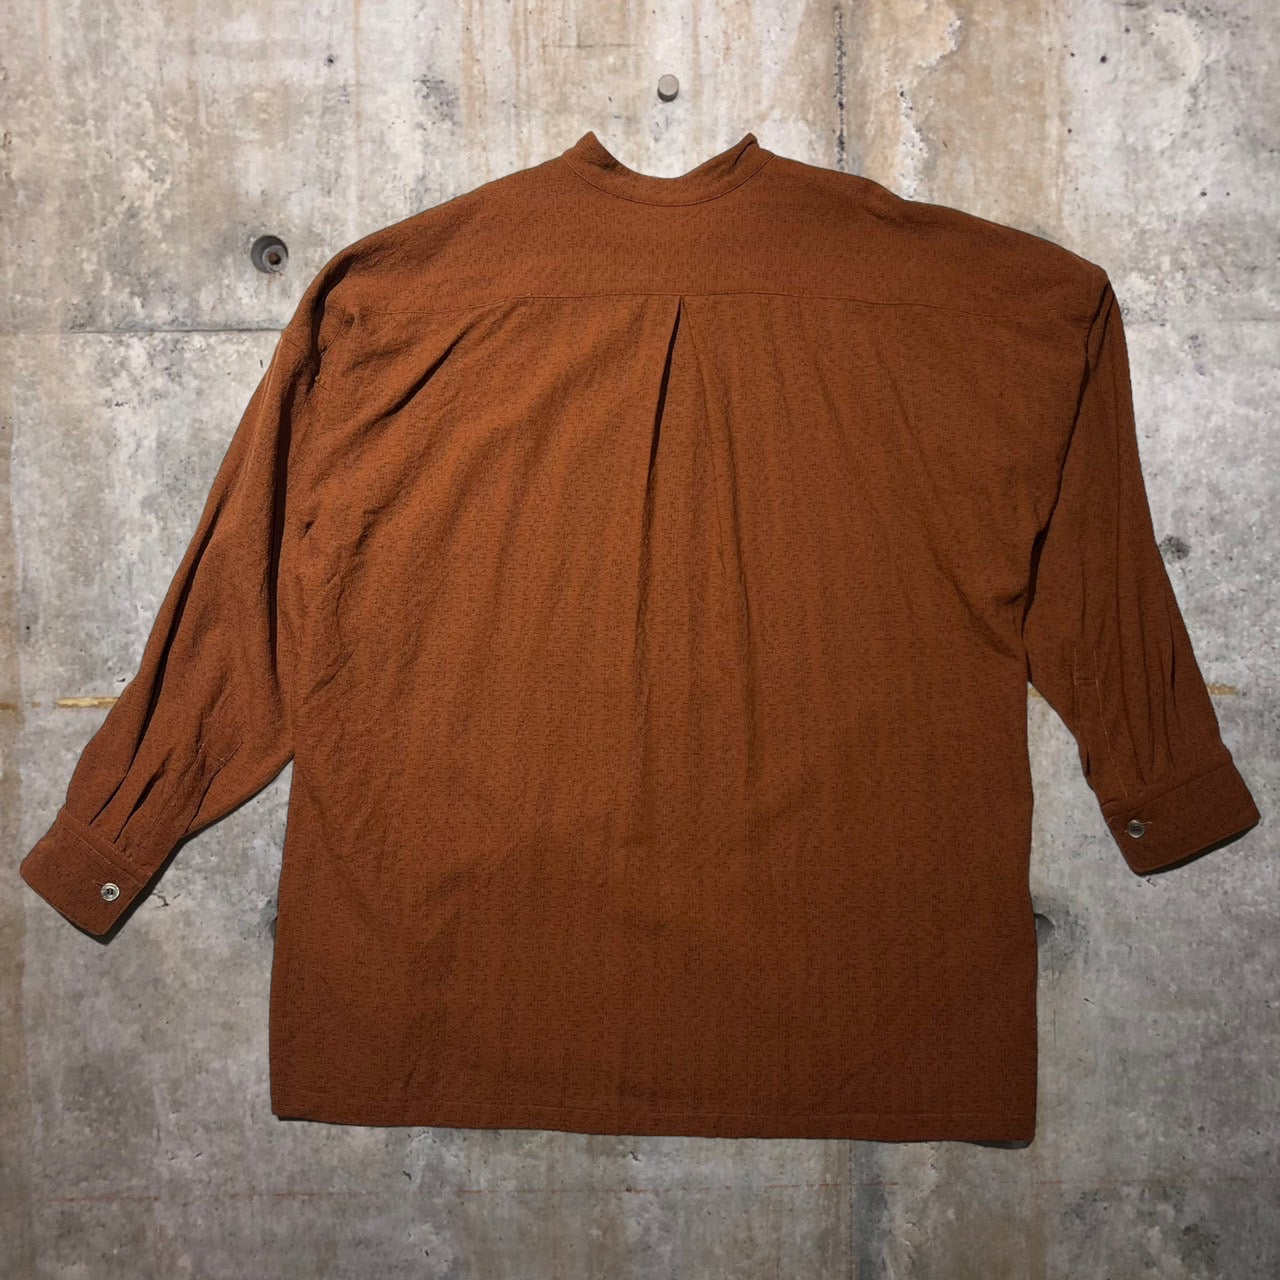 ISSEY MIYAKE(イッセイミヤケ) 90'sバンドカラービッグシャツ 表記なし(L程度) ブラウン